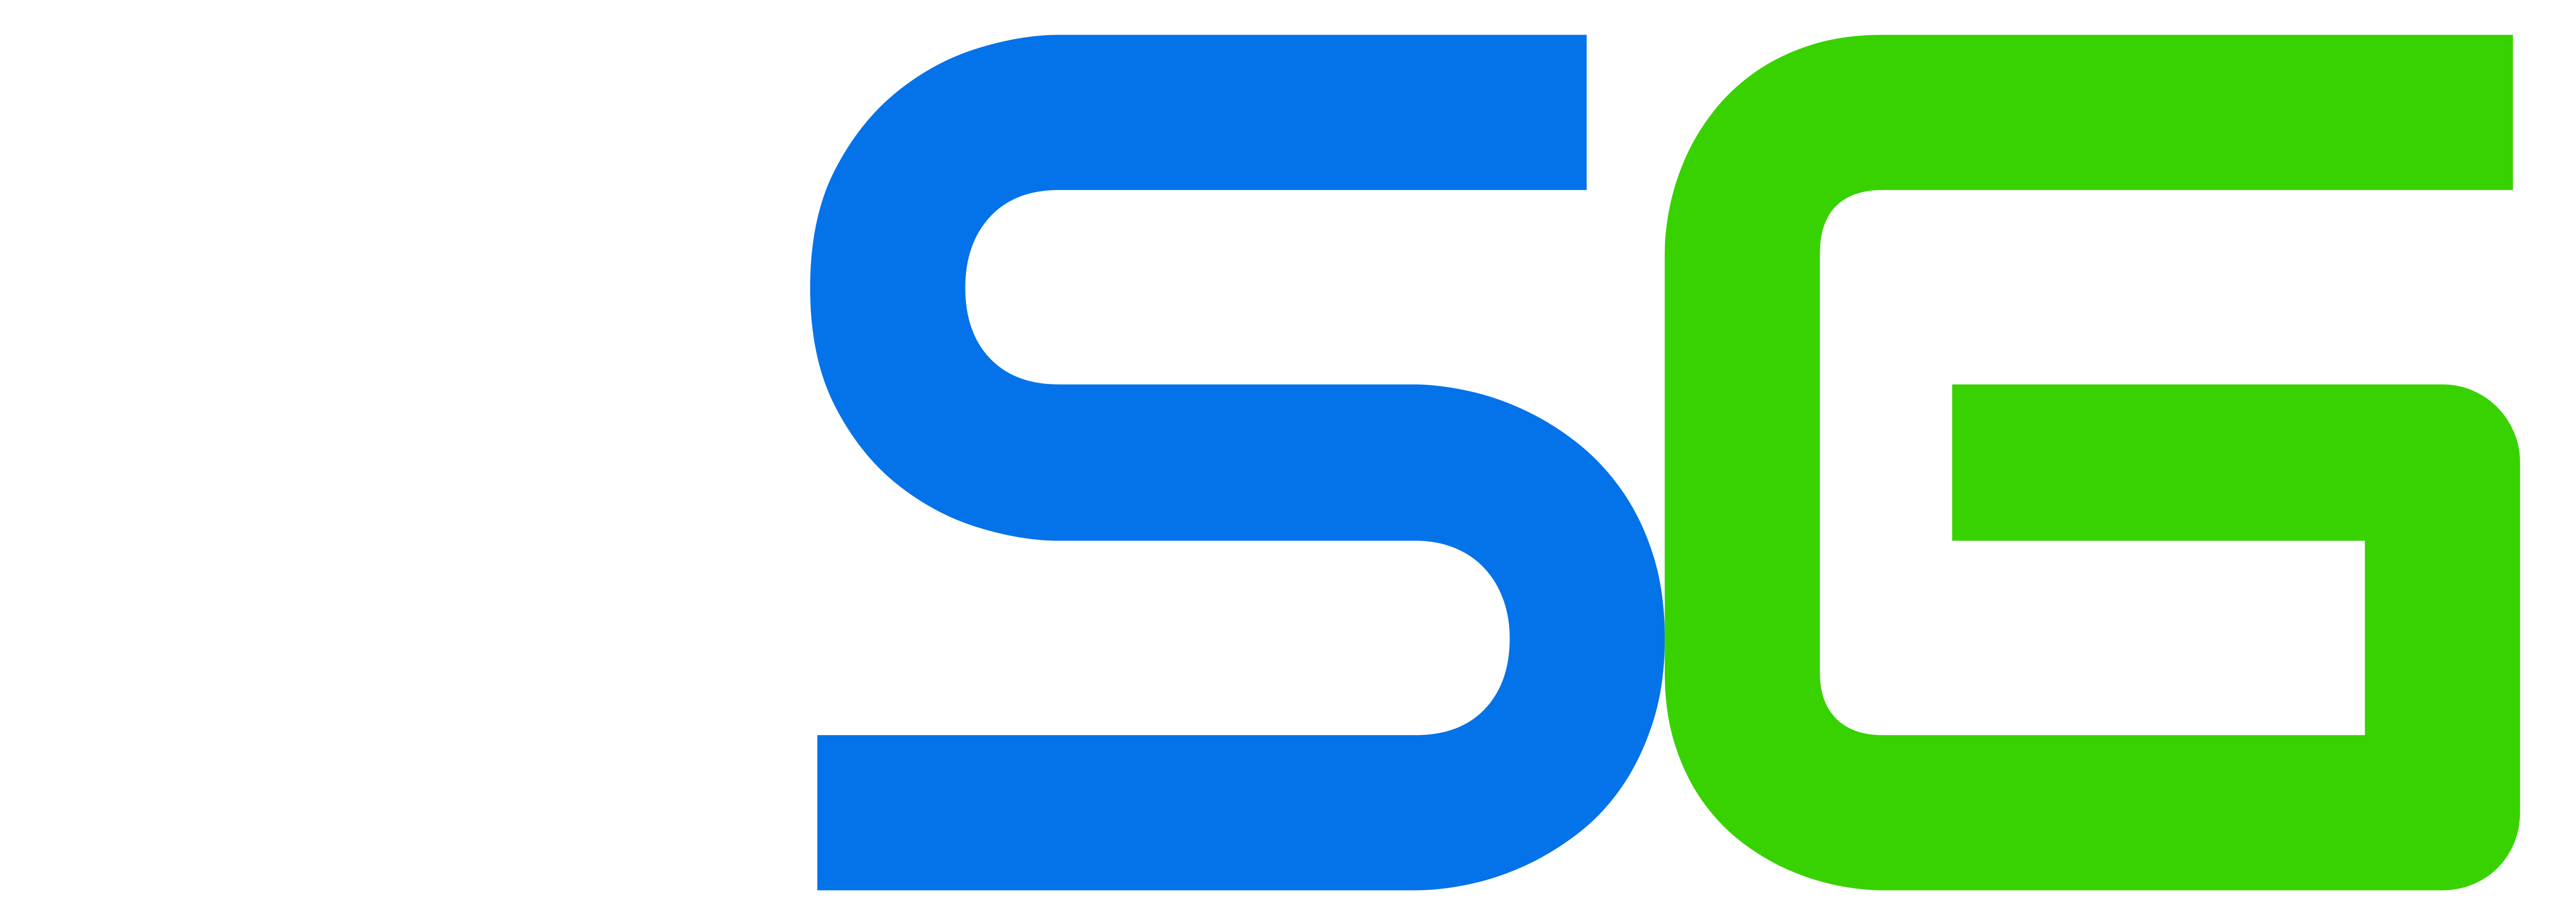 ESG_TEXT Logo On Dark BG